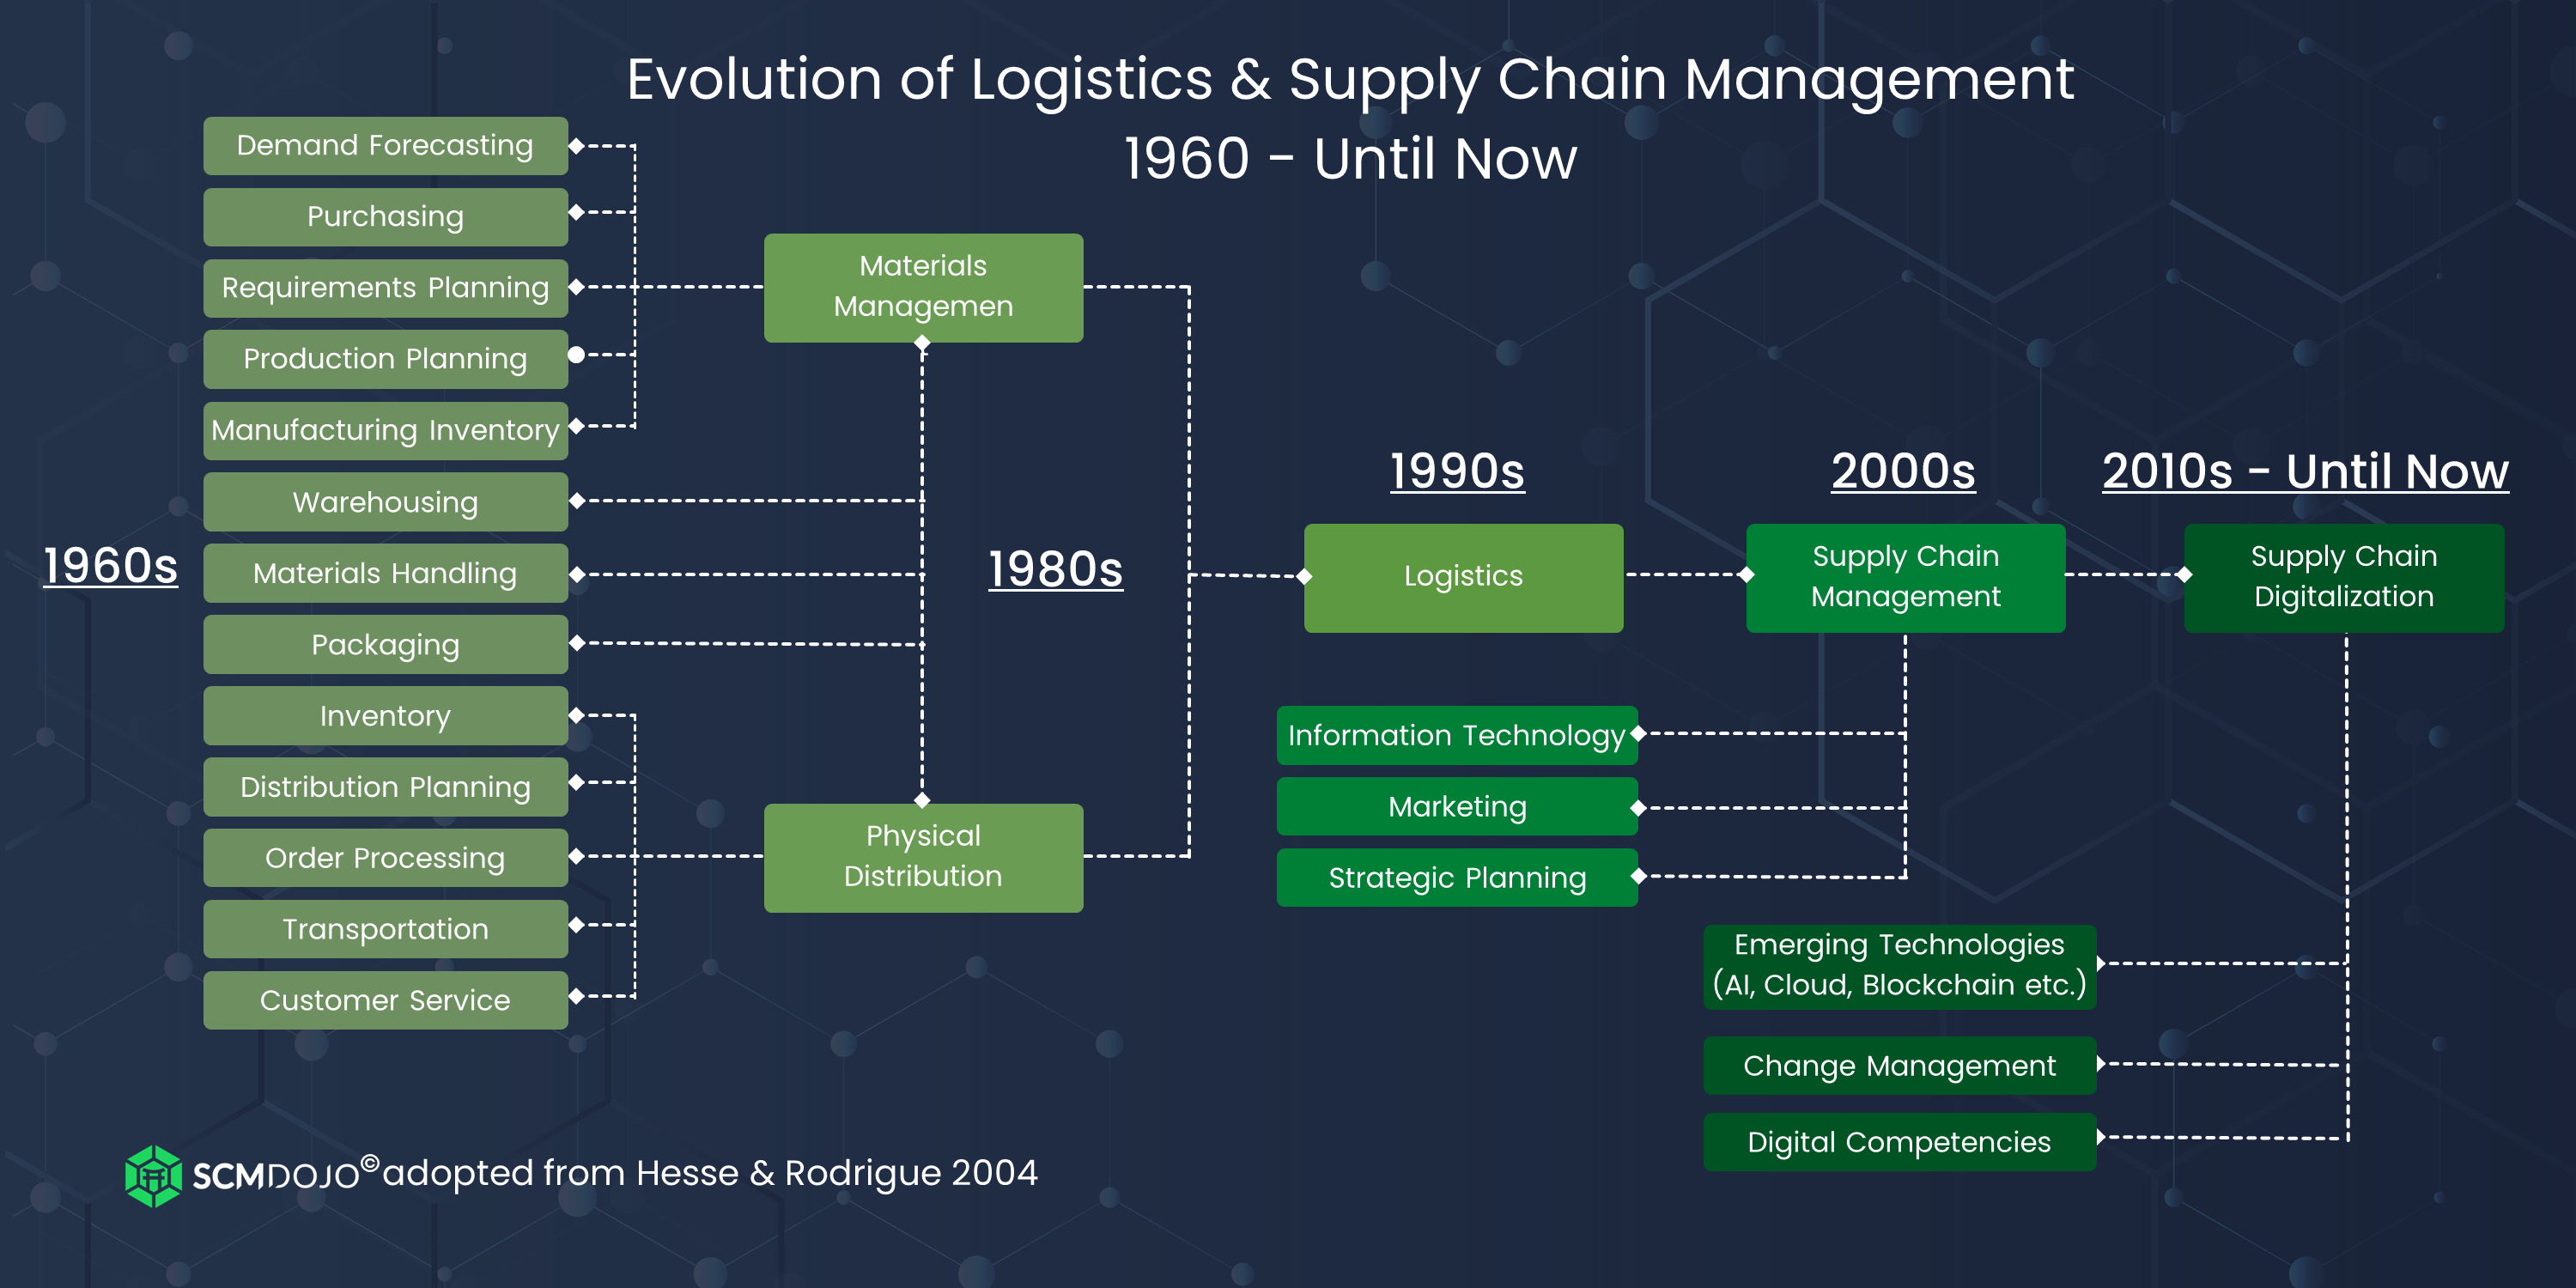 Evolution of Logistics & SCM 1960 - Until Now